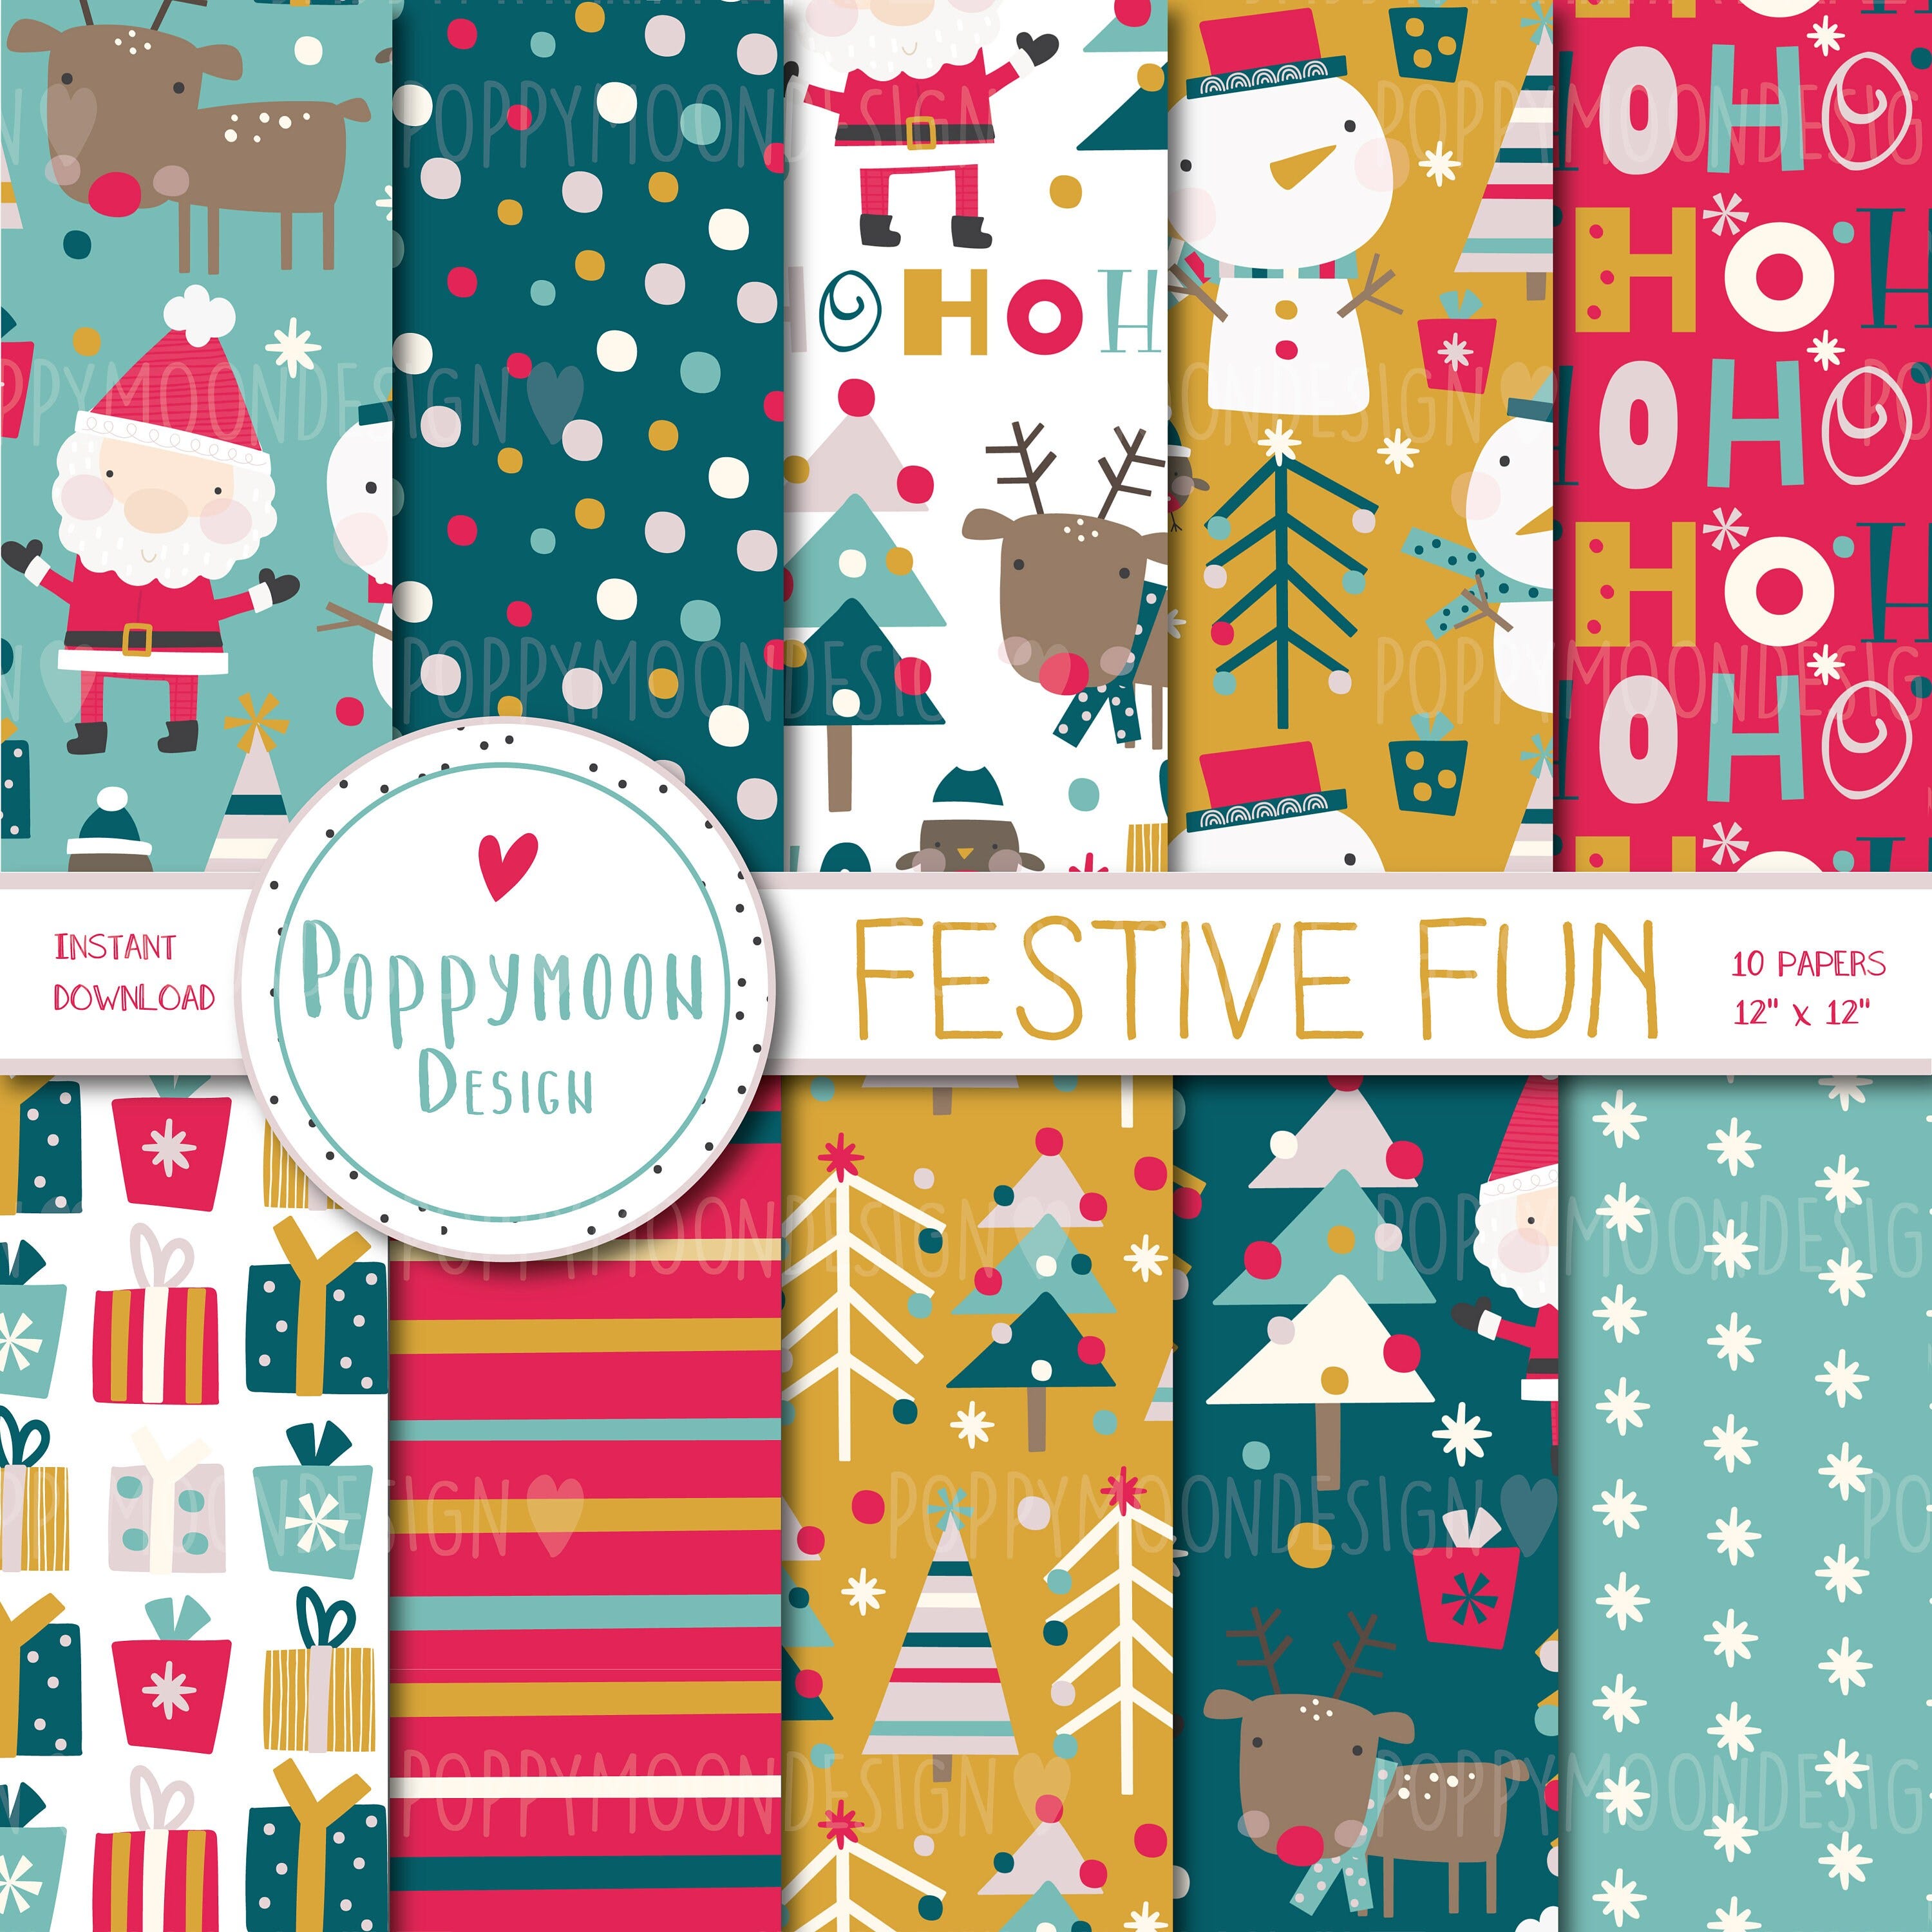 Festive fun, Christmas patterns, digital paper set